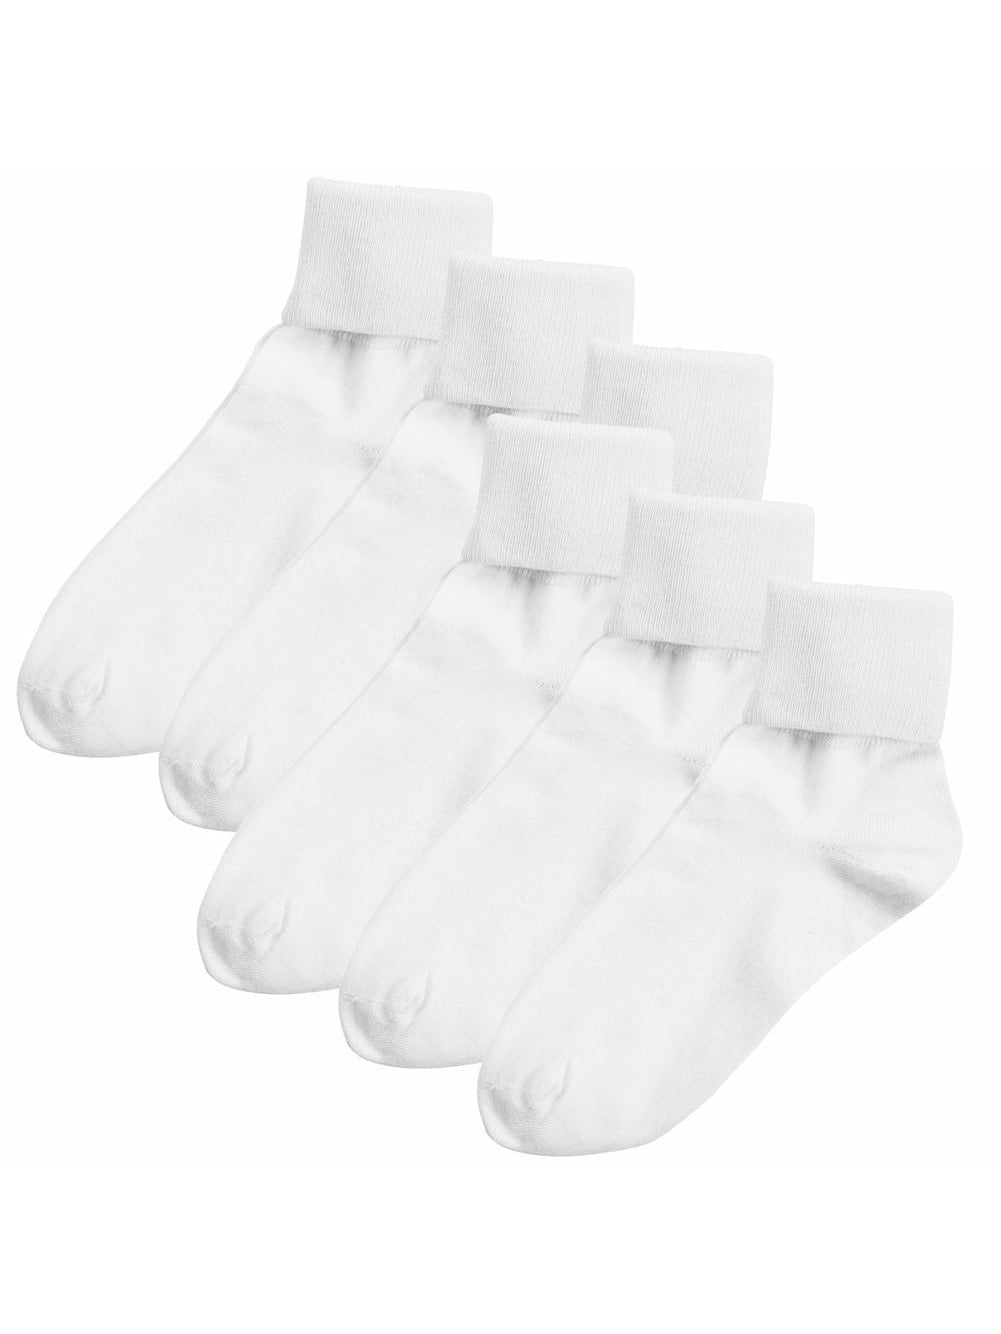 Buster Brown Women's Socks, 6-Pack, 100% Cotton Bobby Sock, 6 Pairs ...